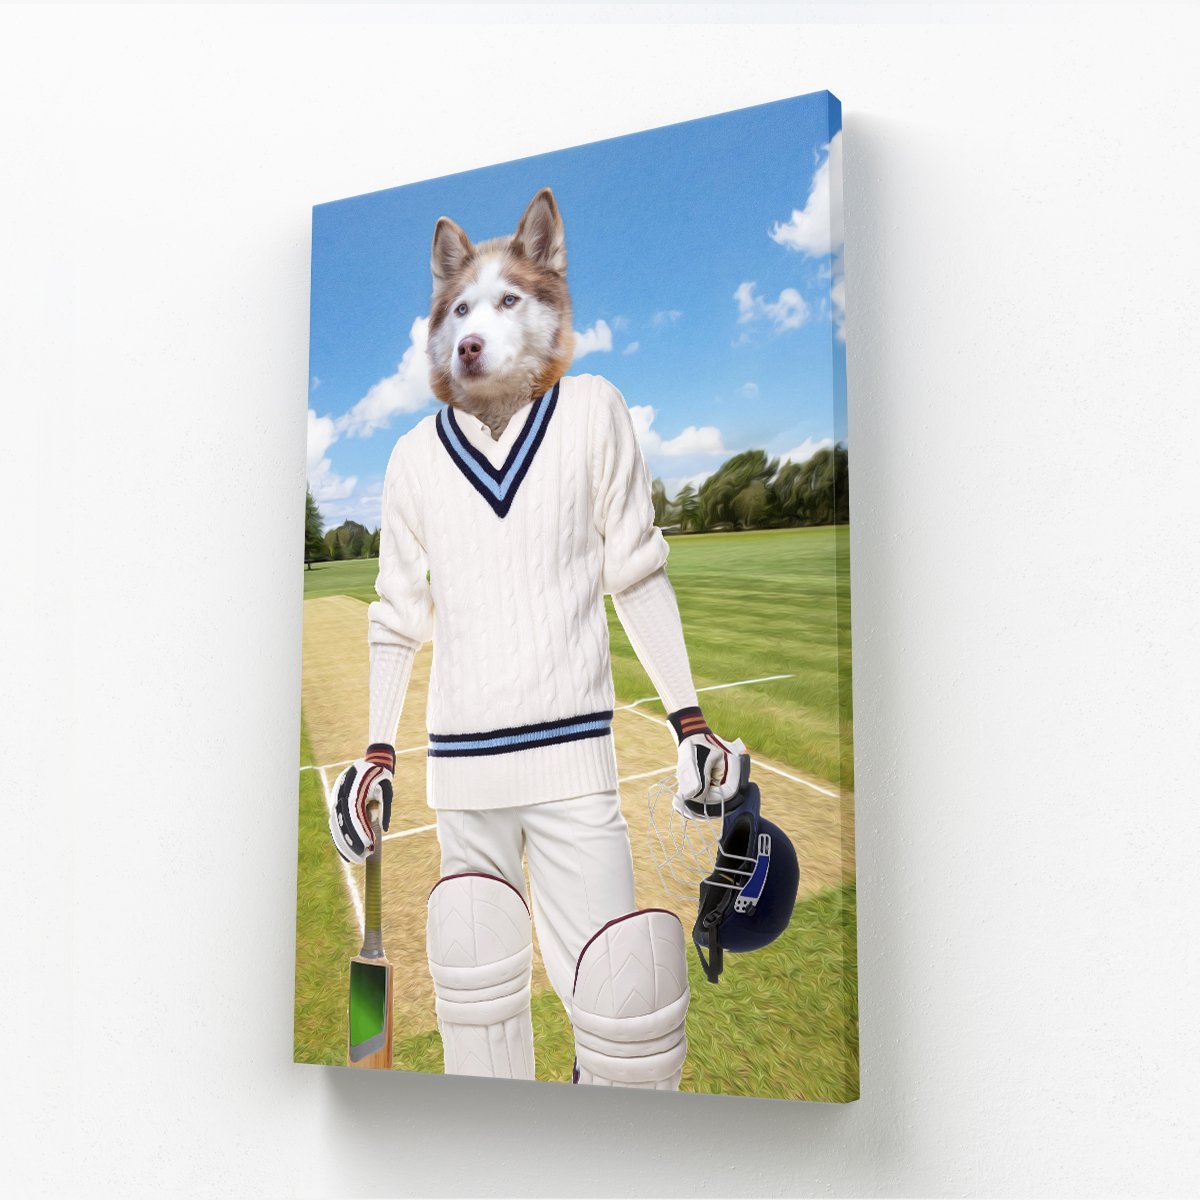 The Cricket Prodigy: Custom Pet Canvas - Paw & Glory - #pet portraits# - #dog portraits# - #pet portraits uk#paw & glory, custom pet portrait canvas,pet art canvas, dog art canvas, custom pet canvas, pet photo canvas, pet on canvas